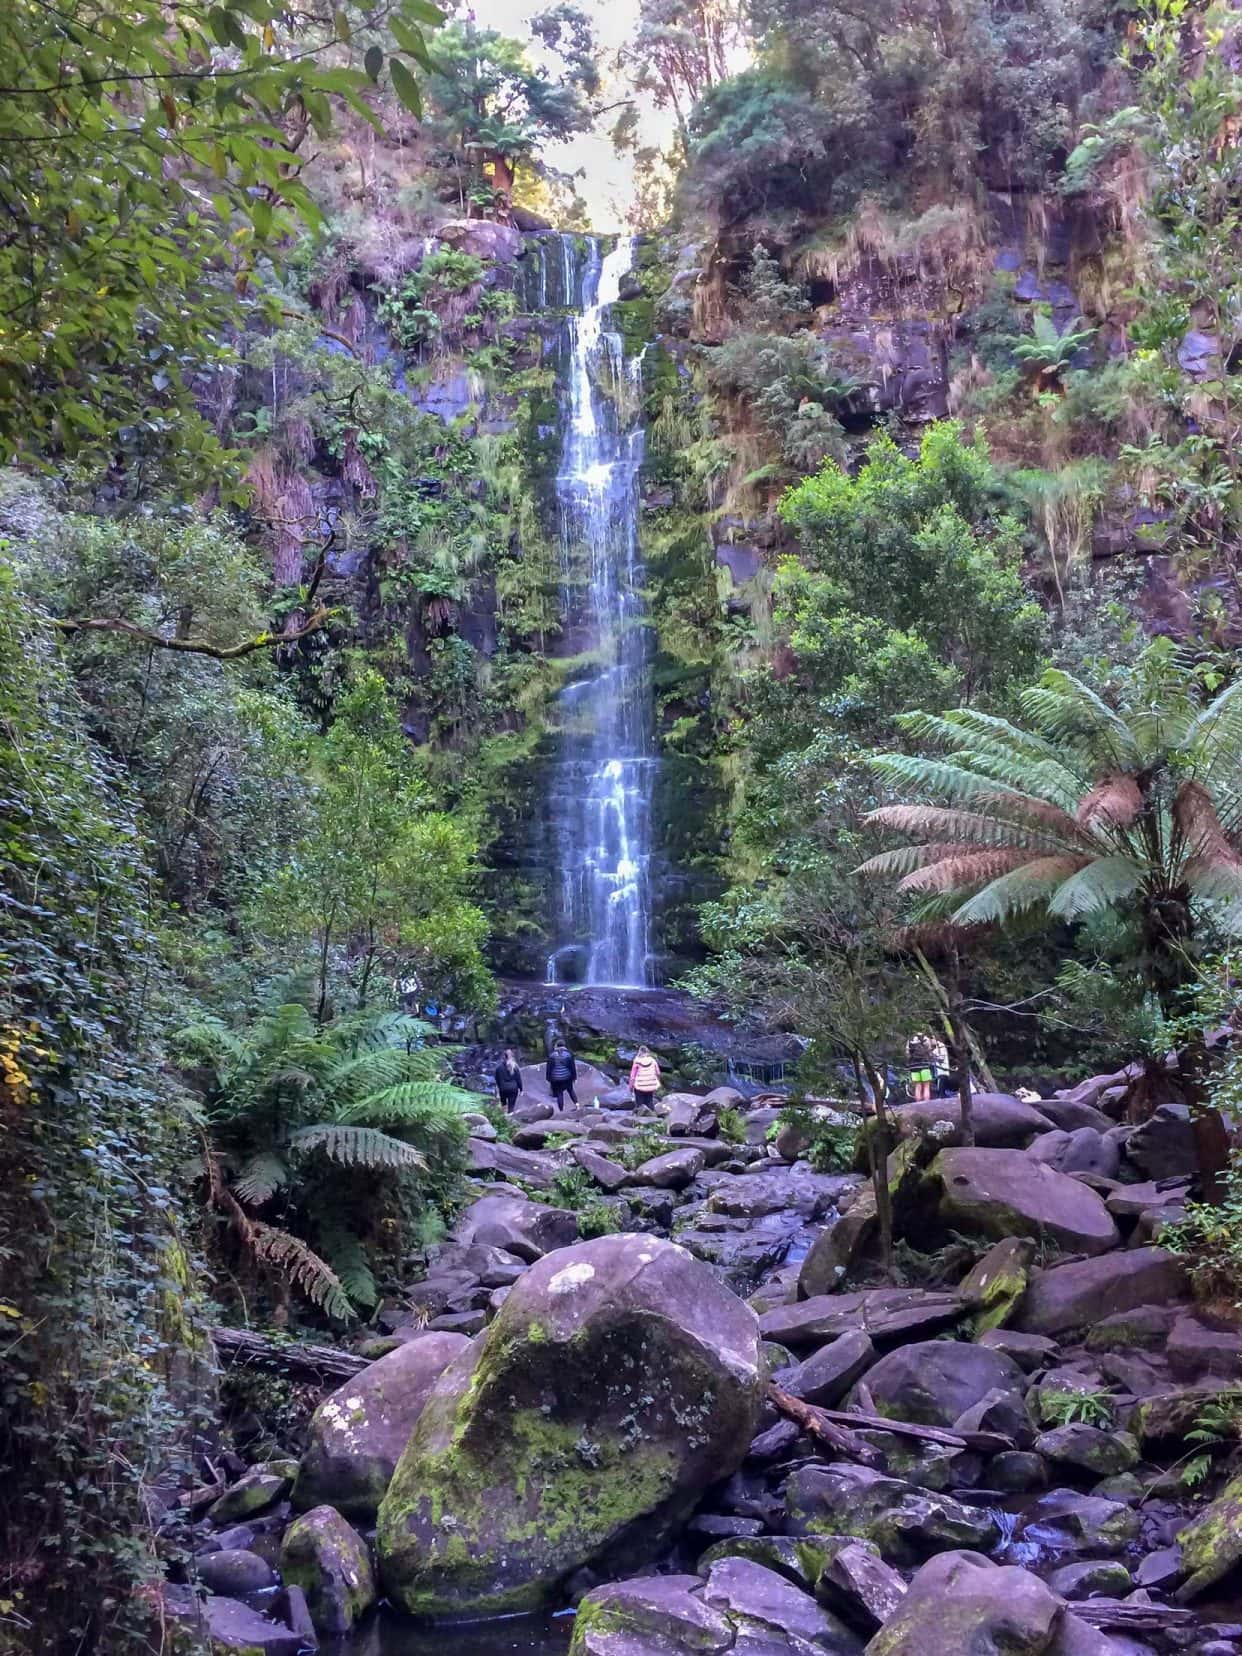 This waterfall amongst lush vegetation